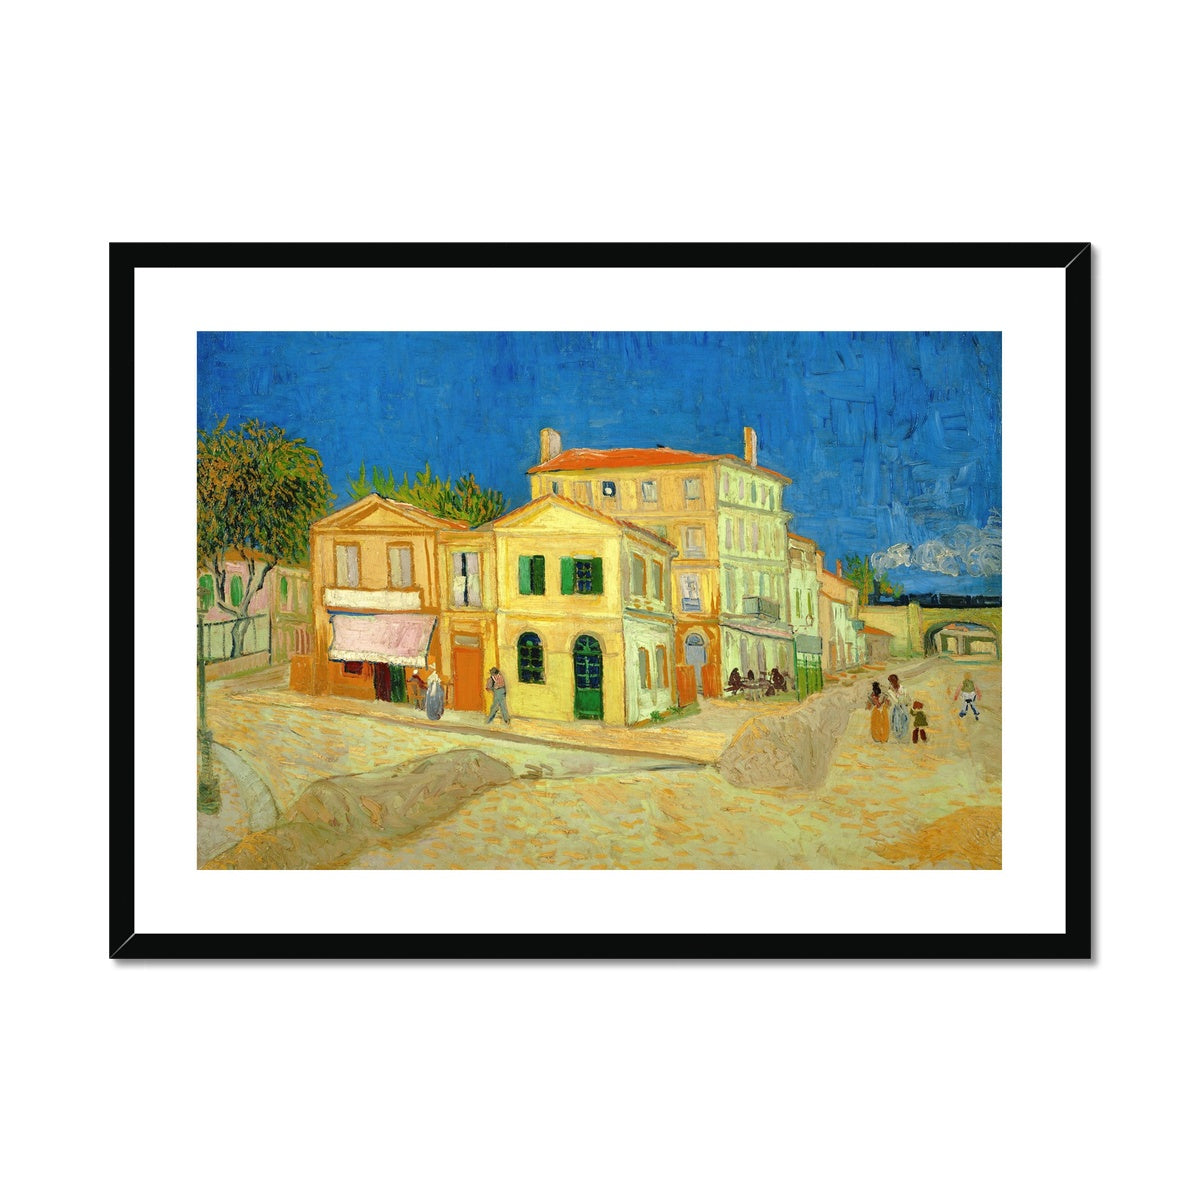 Vincent Van Gogh Framed Open Edition Art Print. 'The Yellow House'. Art Gallery Historic Art